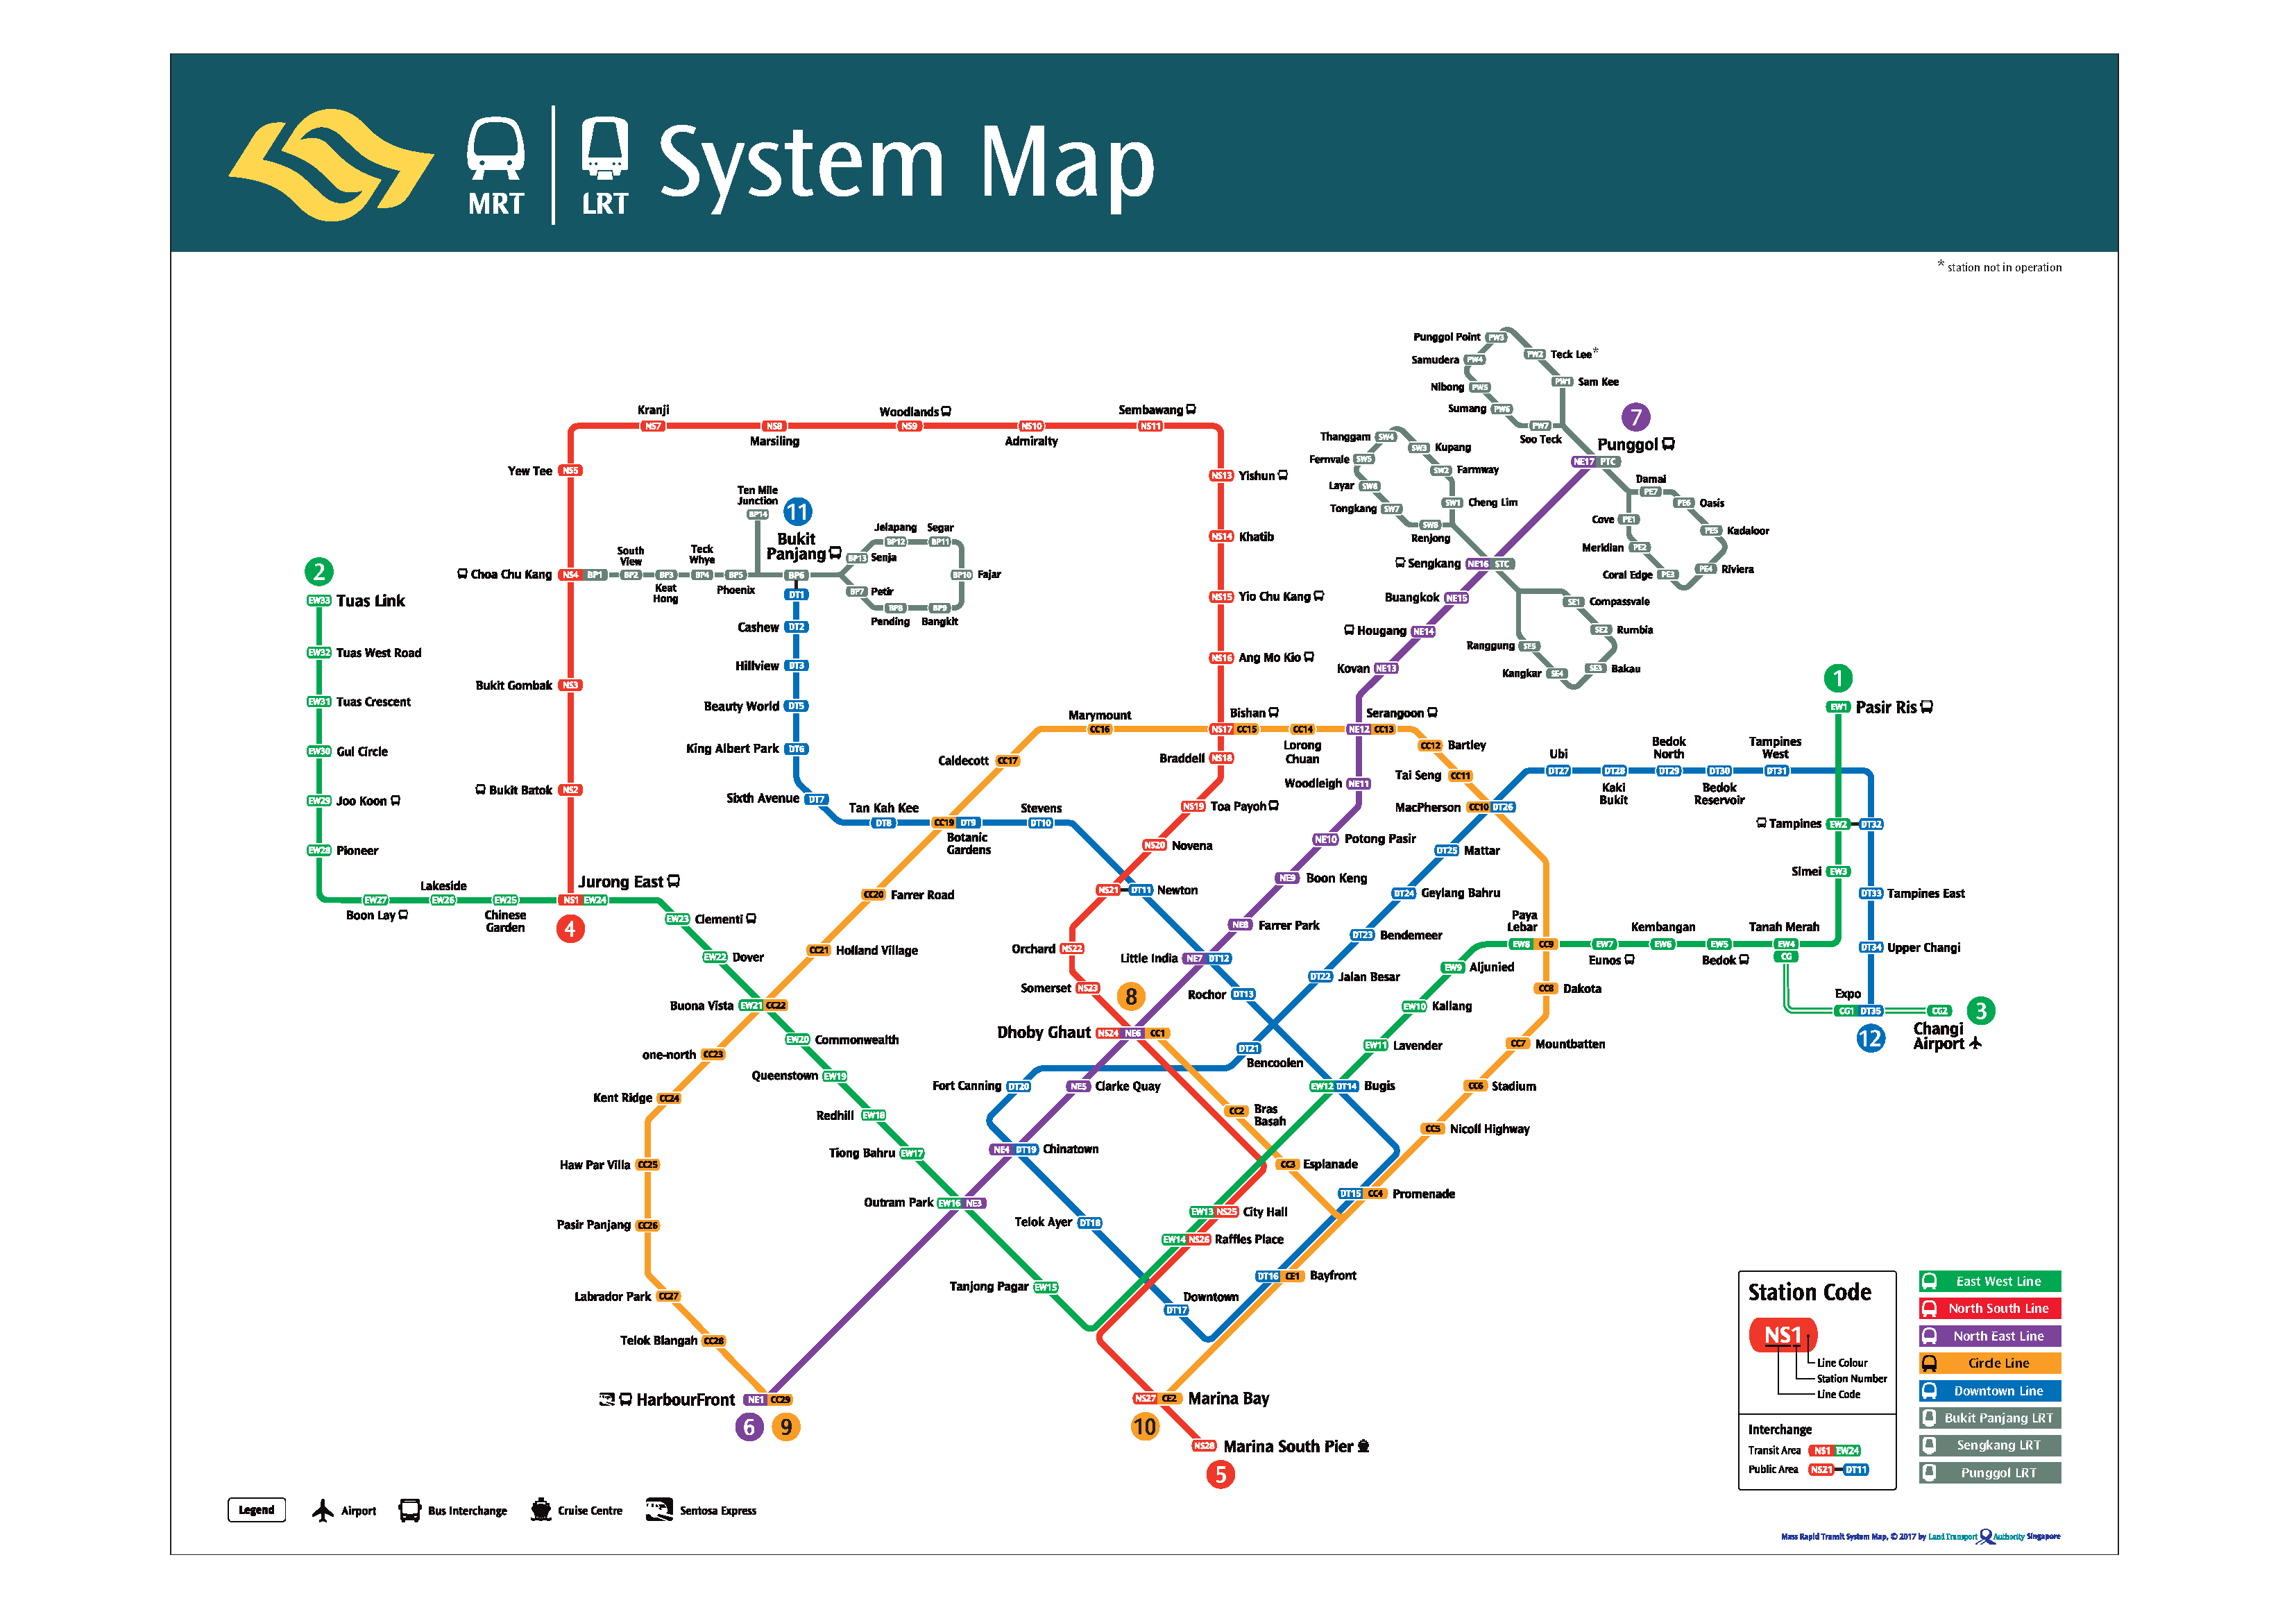 Singapore MRT Map